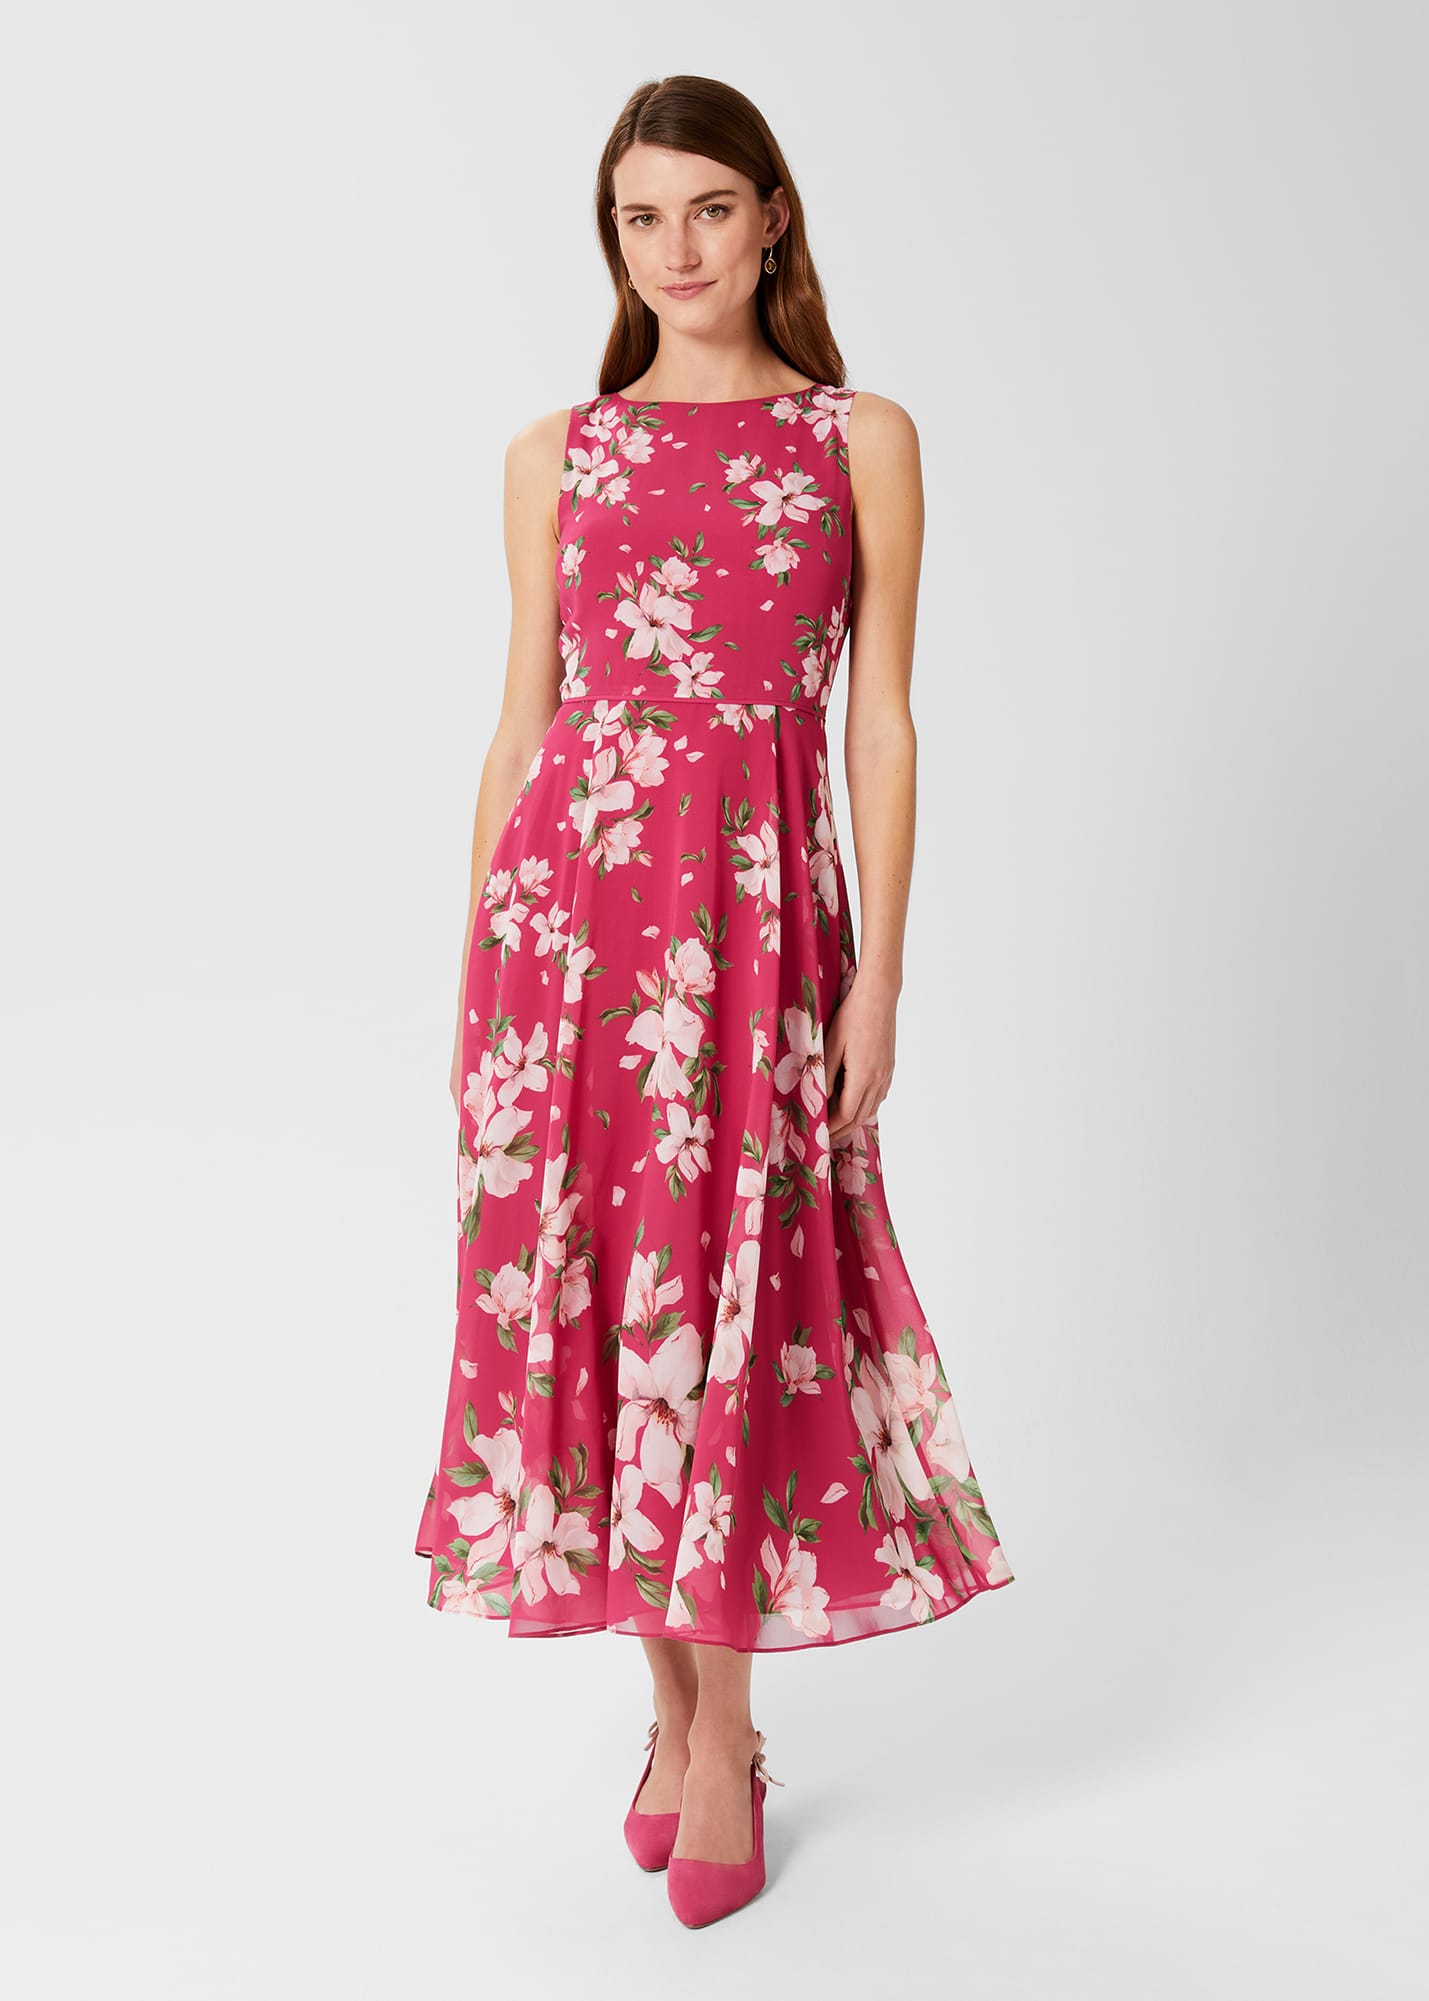 Hobbs Women's Carly Floral Midi Dress - Pink Multi